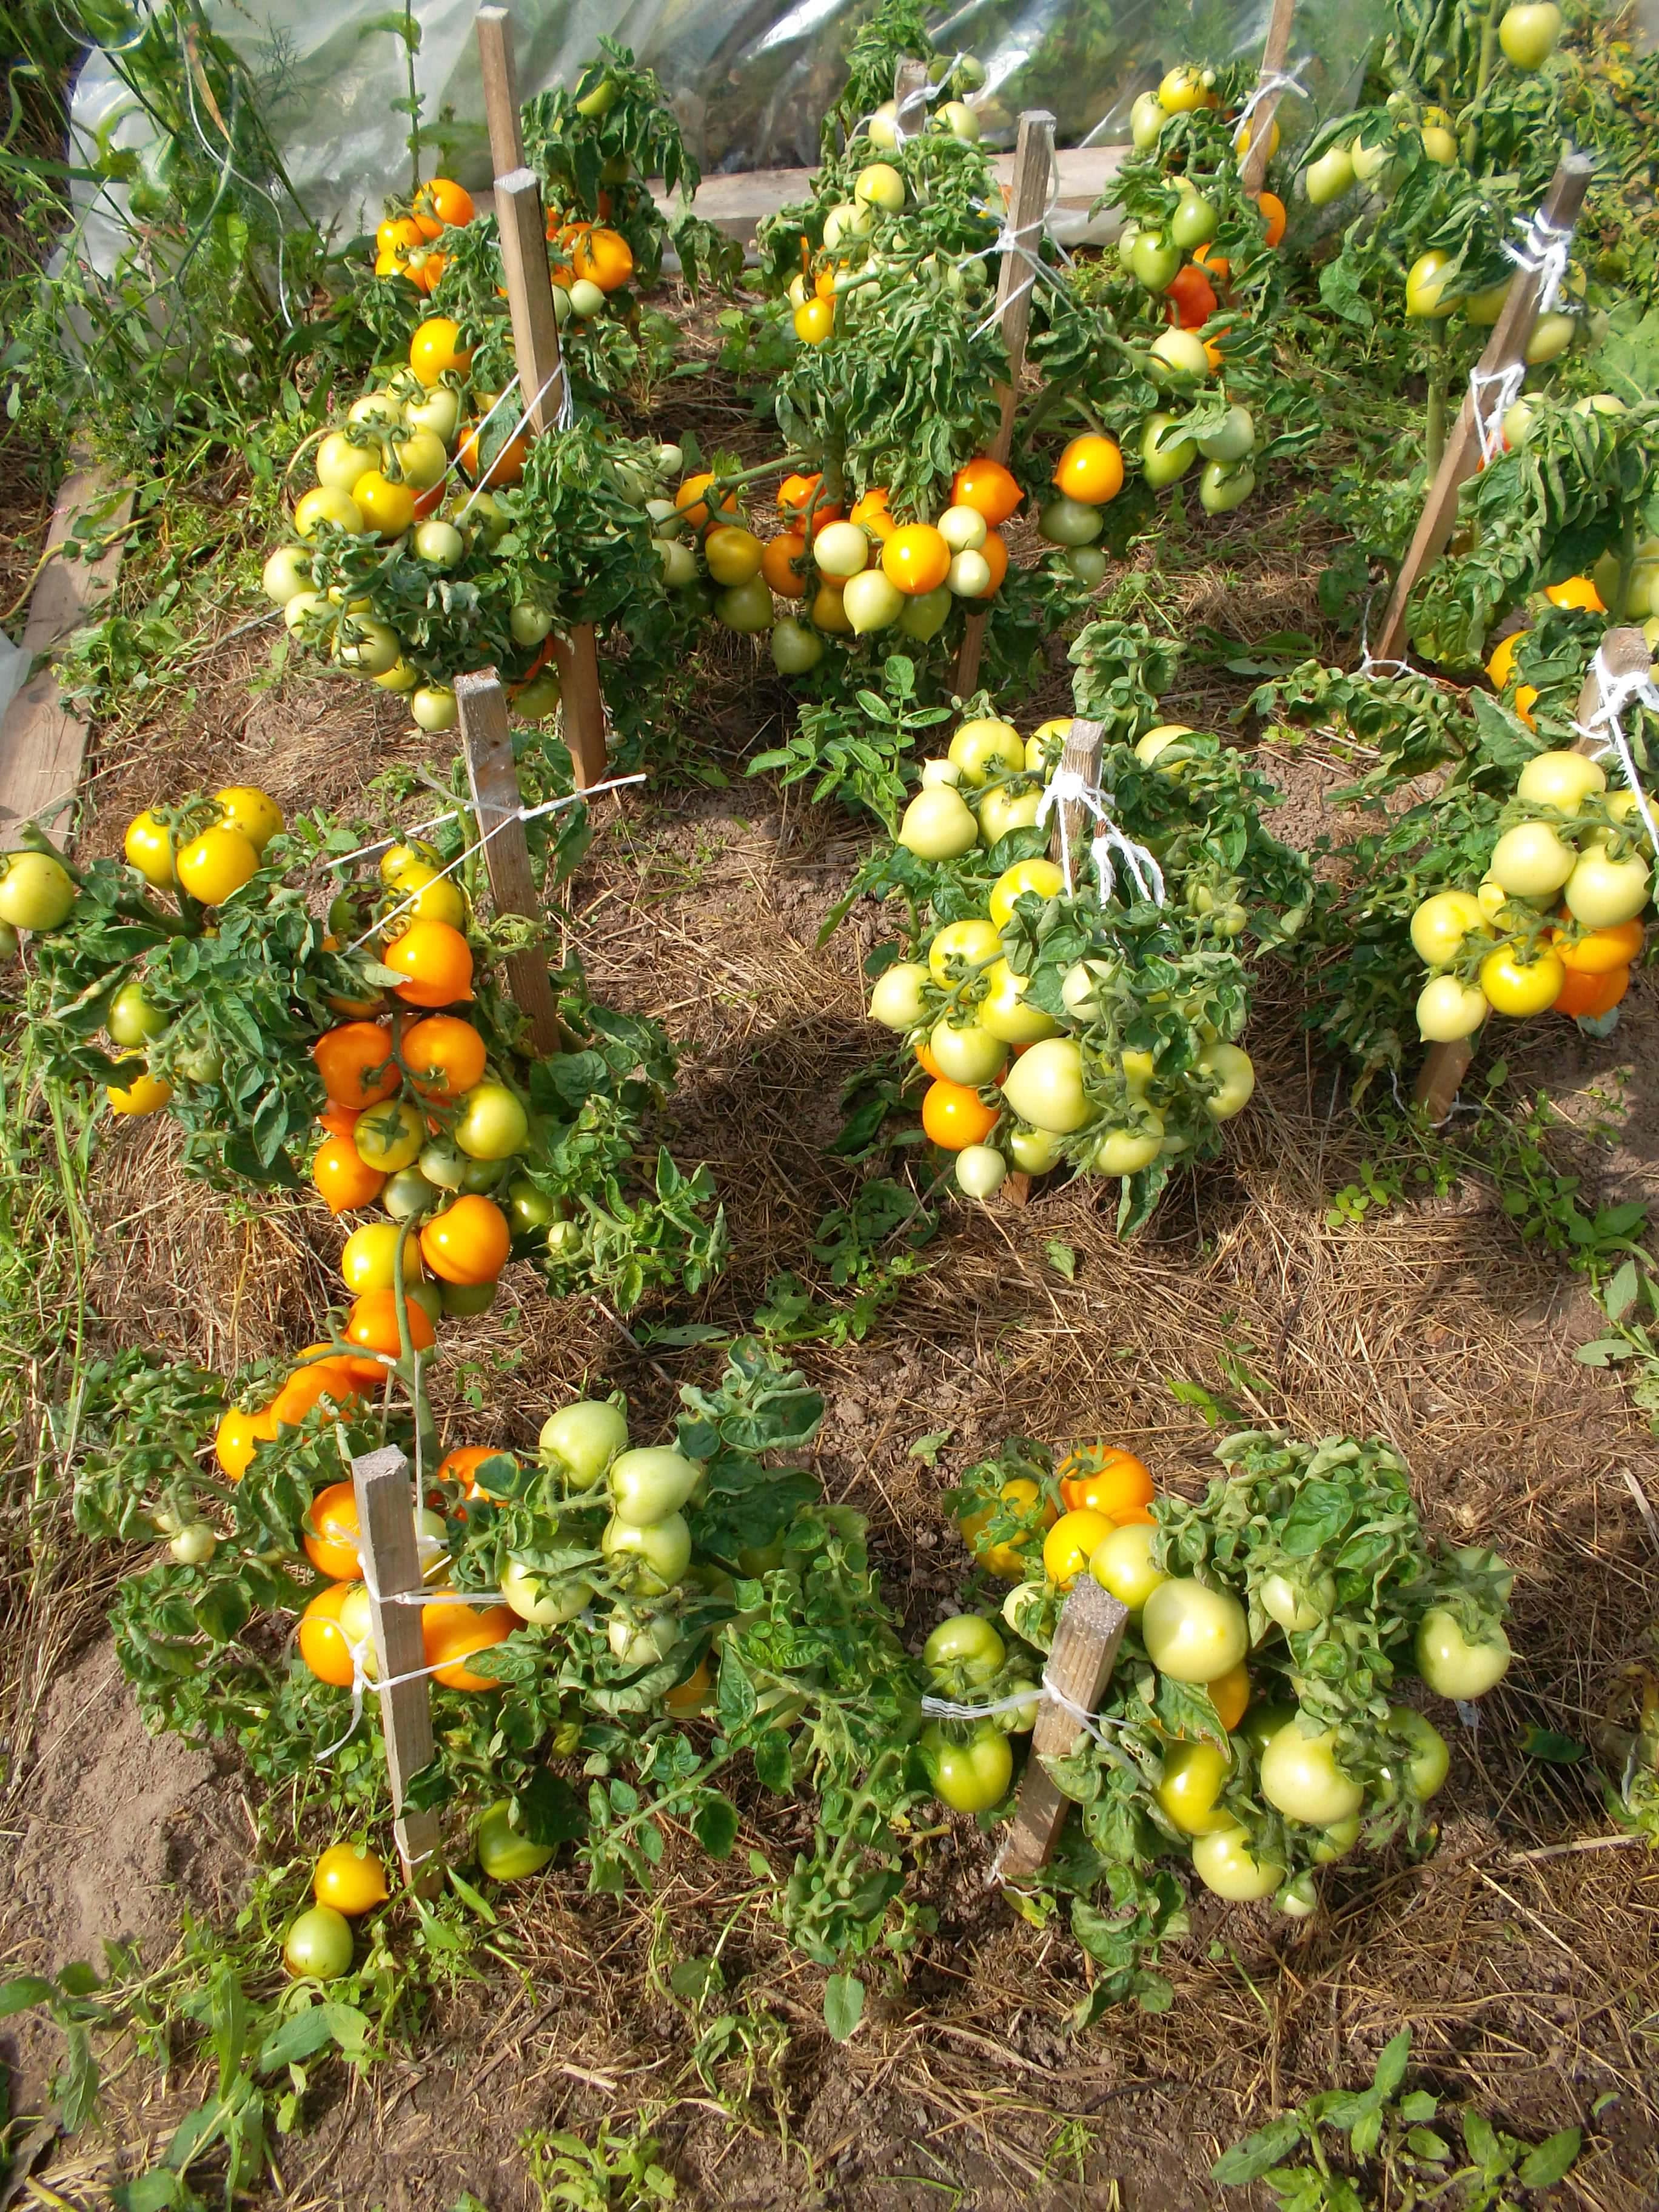 Семена томат Монгольский карлик низкорослый